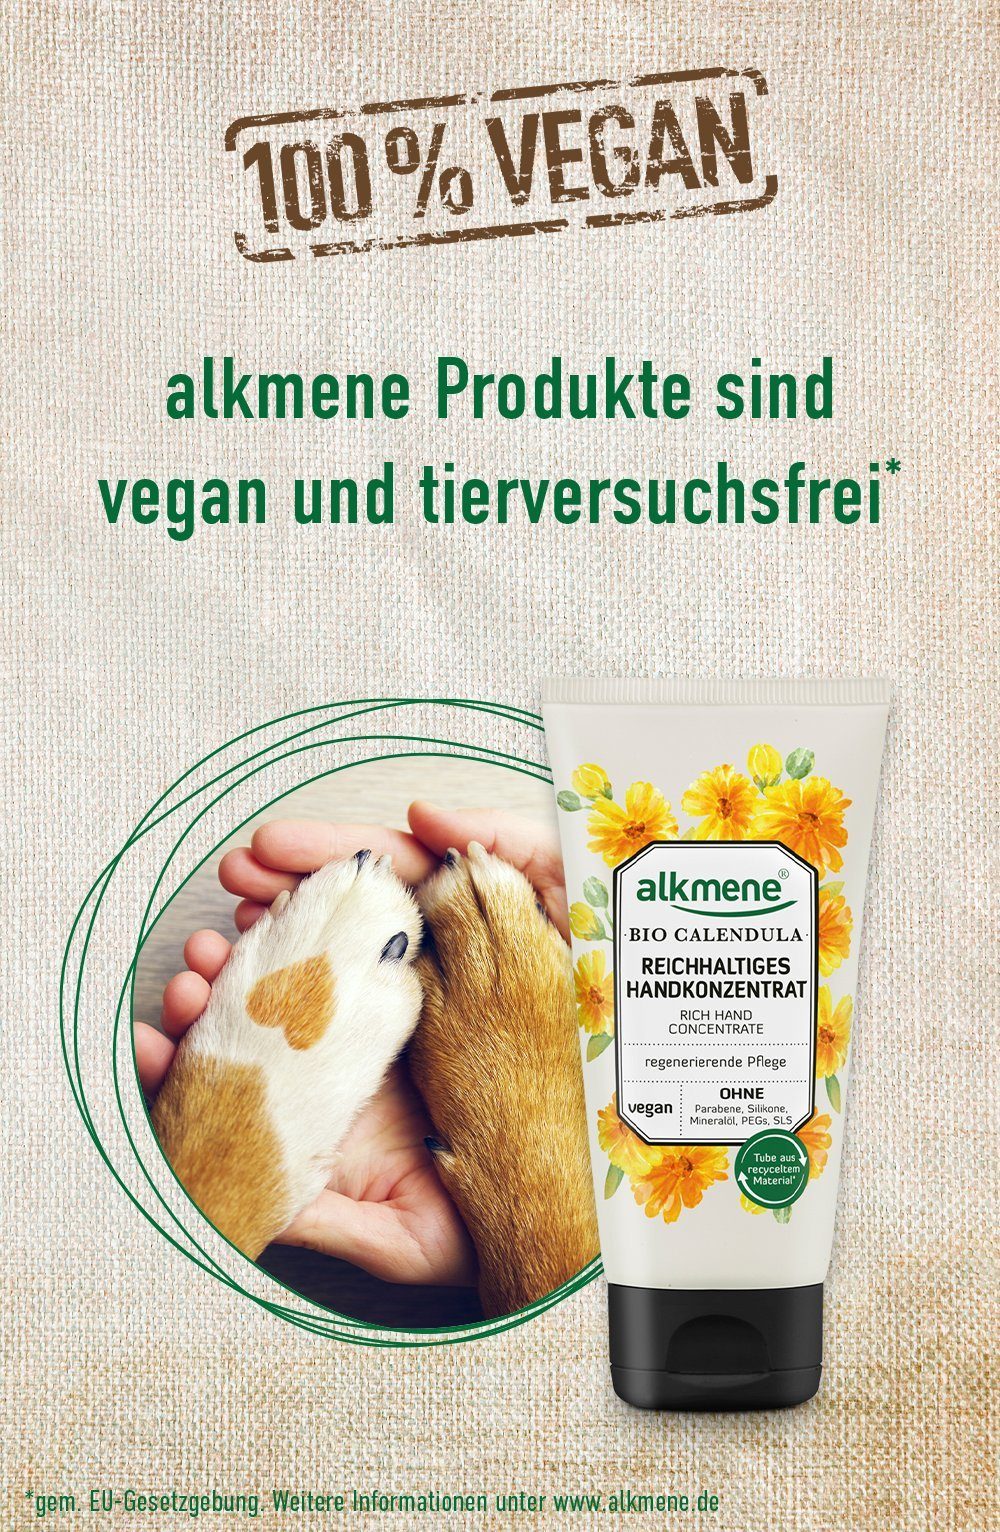 alkmene Handcreme Handkonzentrat Bio Calendula vegane - 1-tlg. reichhaltige Creme, Handcreme